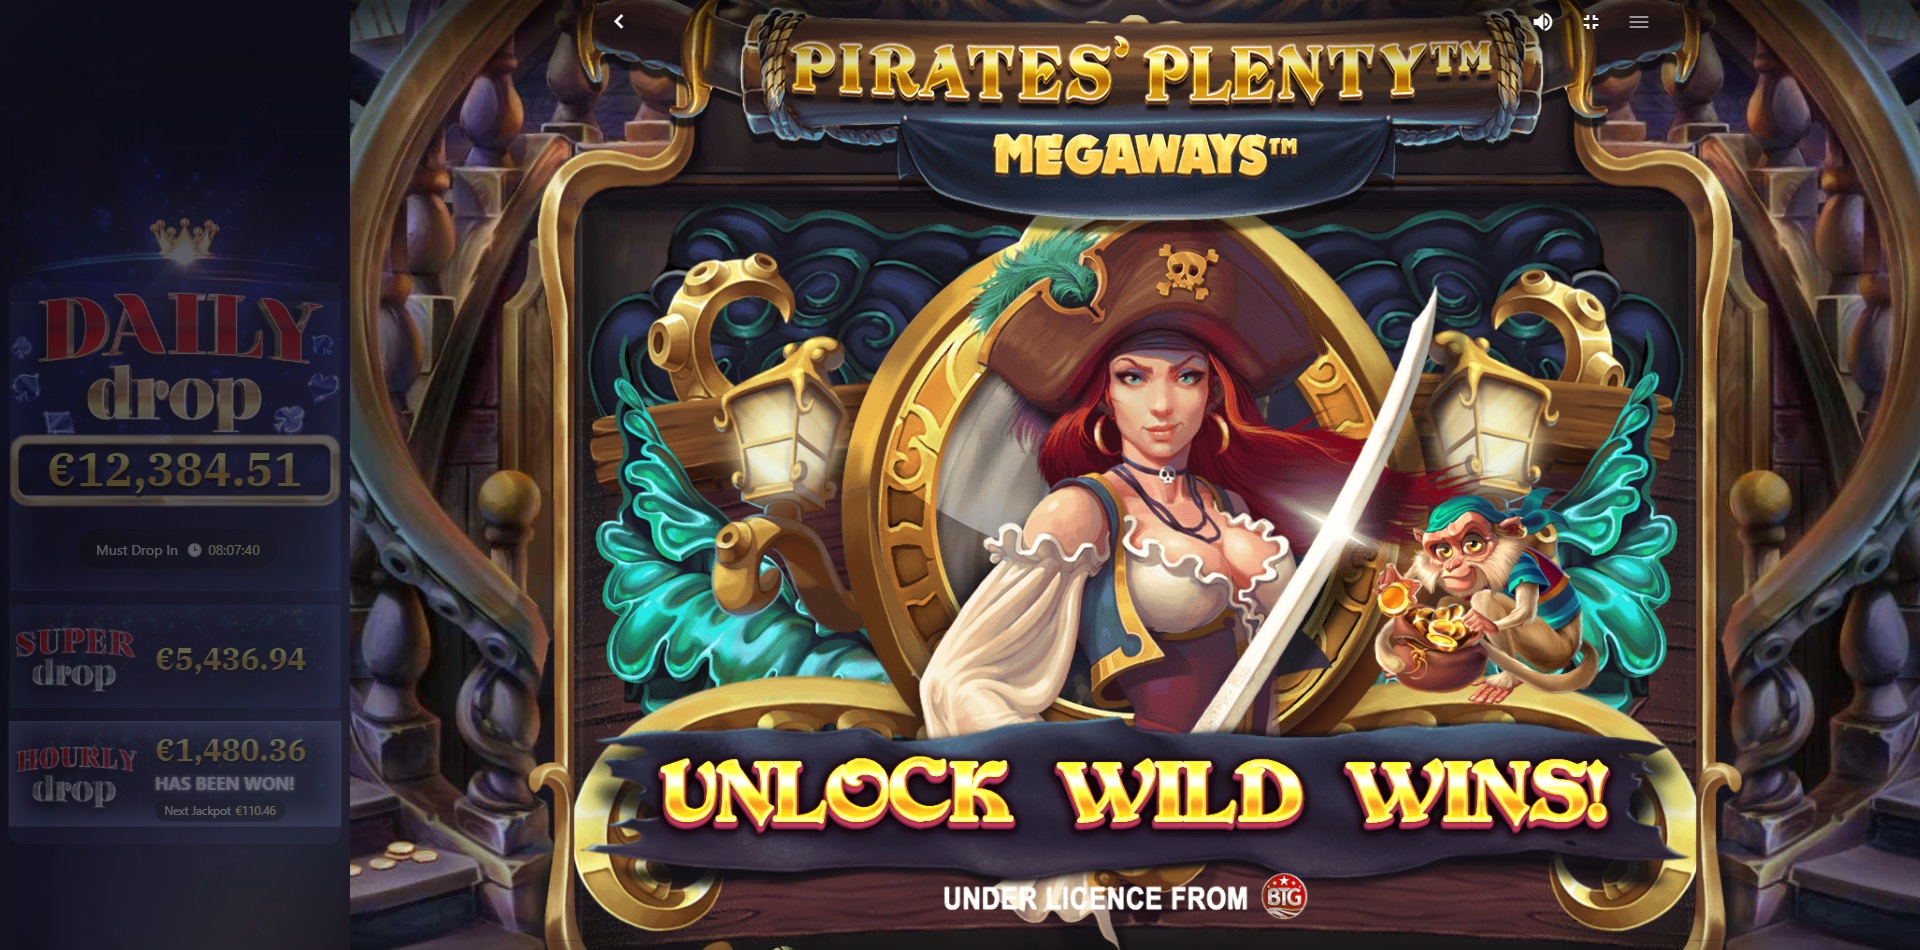 Pirates' Plenty Megaways Slot Machine Guide